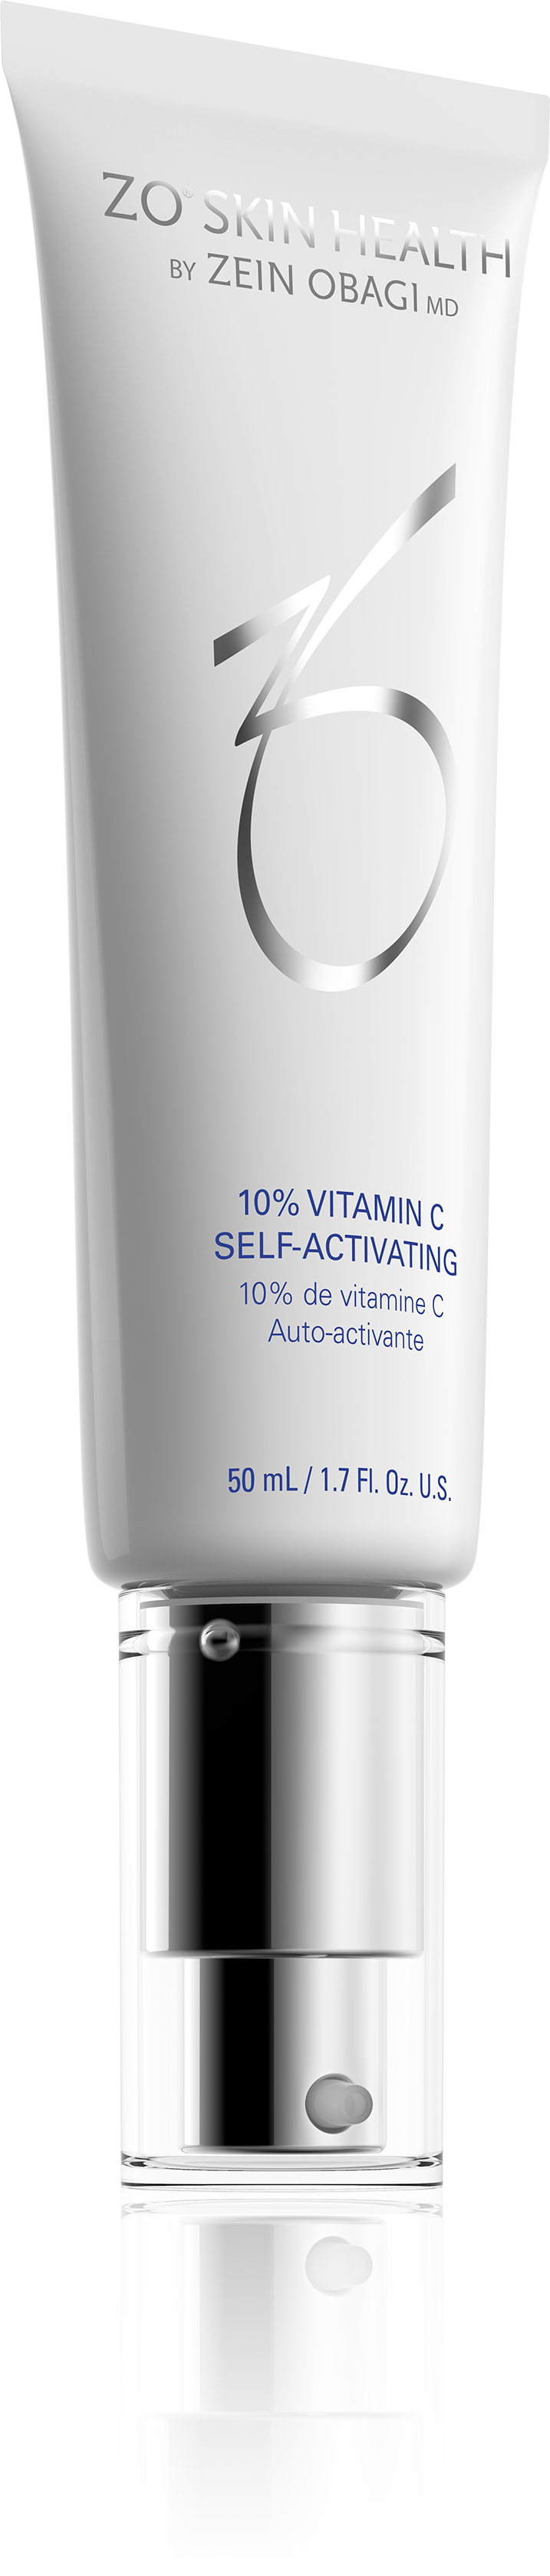 10% Vitamin C Self-Activating